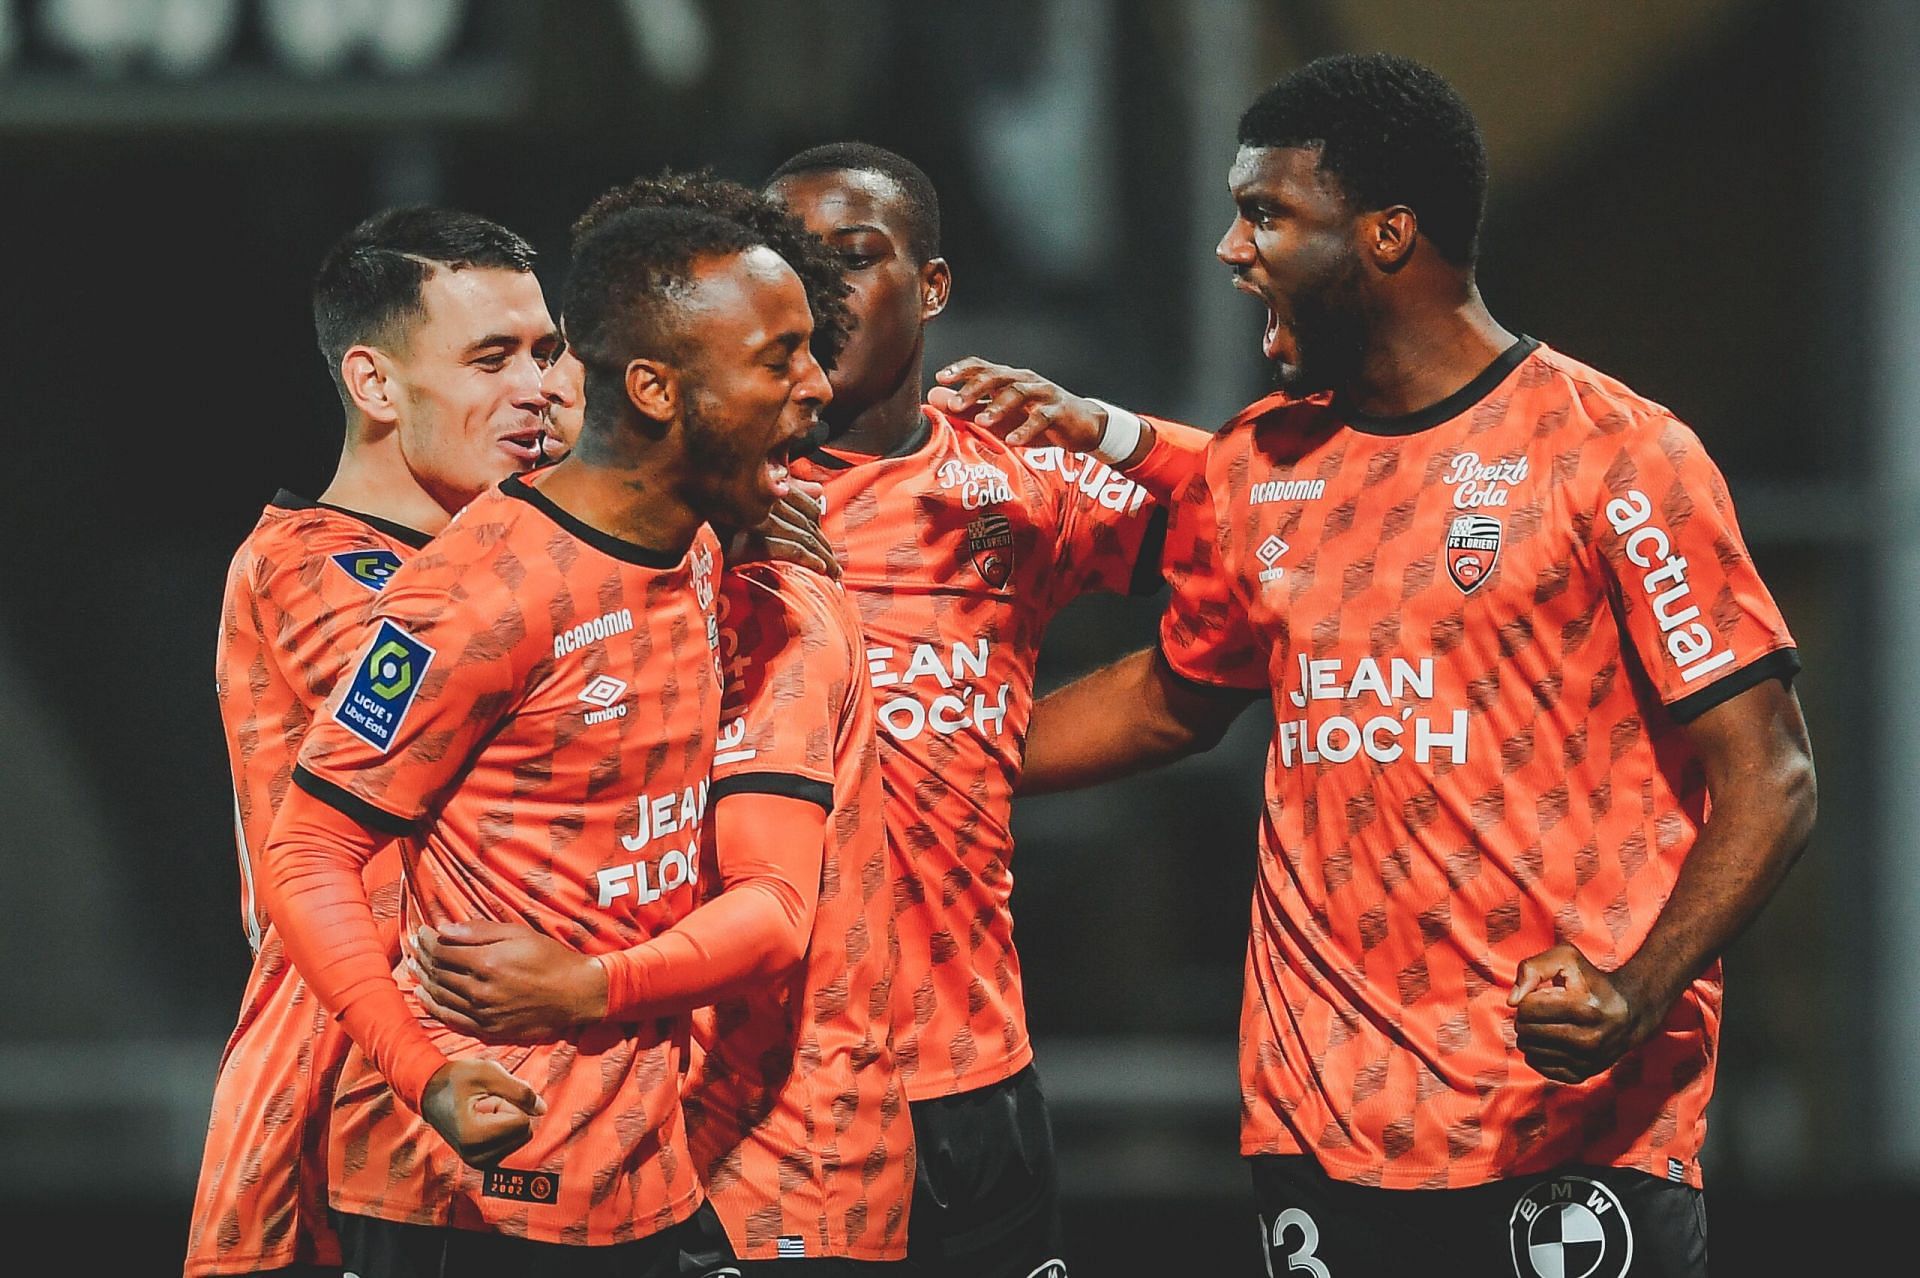 Lorient will battle Angers on Sunday 